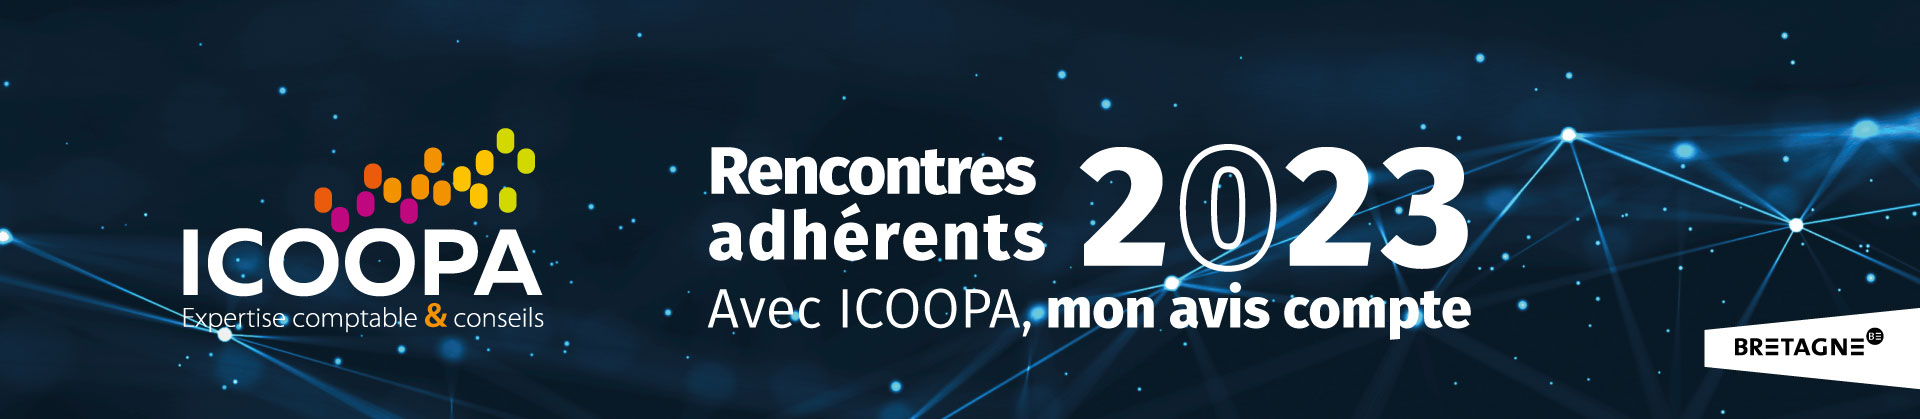 ICOOPA-invitation-rencontre-adherent-2023